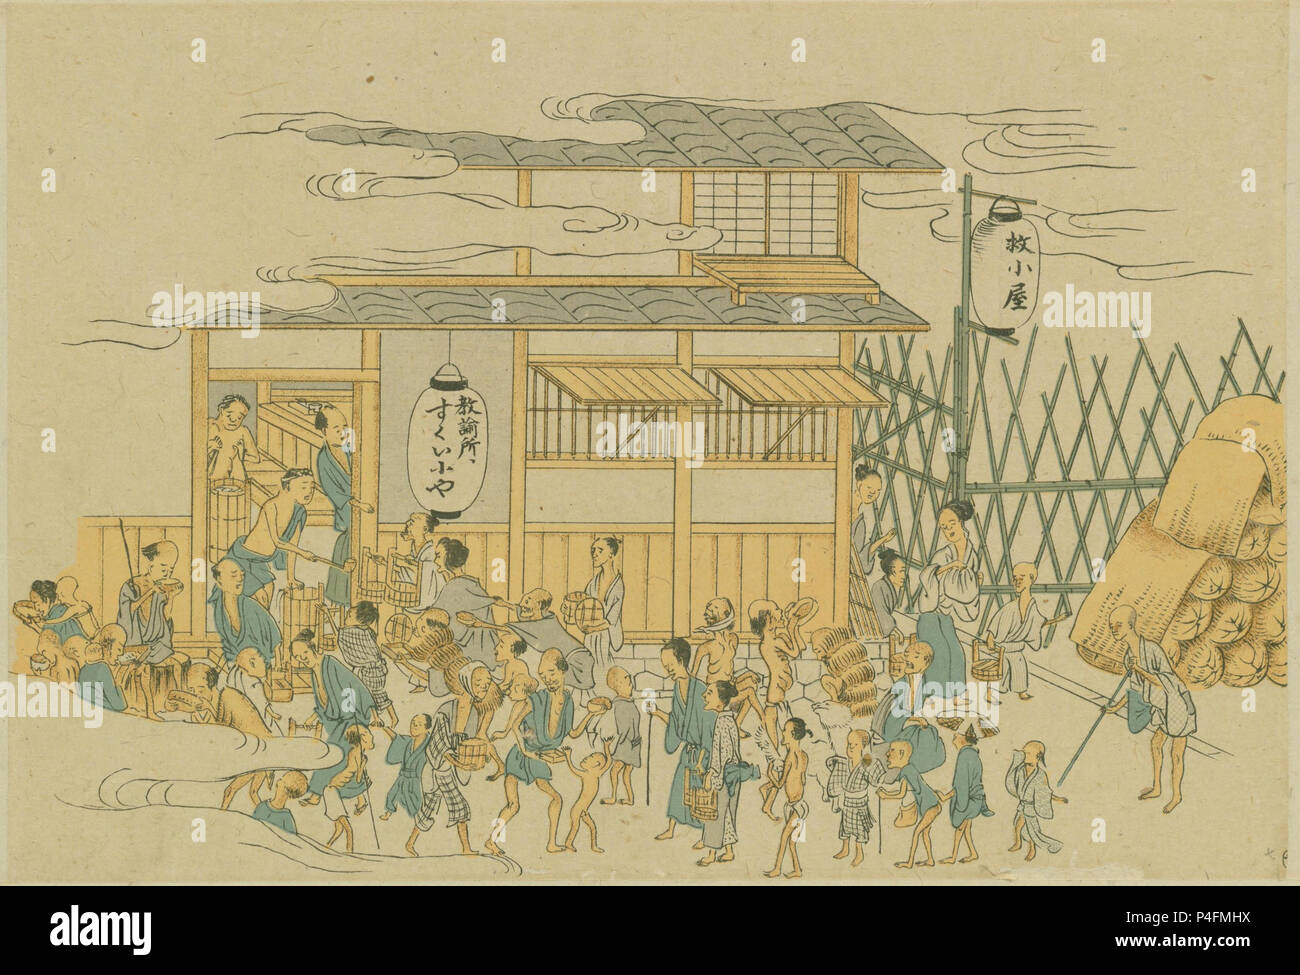 Scène de refuge de secours, illustration de ' Kosai ryumin kyushutsuzu ', artiste Kazan Watanabe, 1838 Banque D'Images